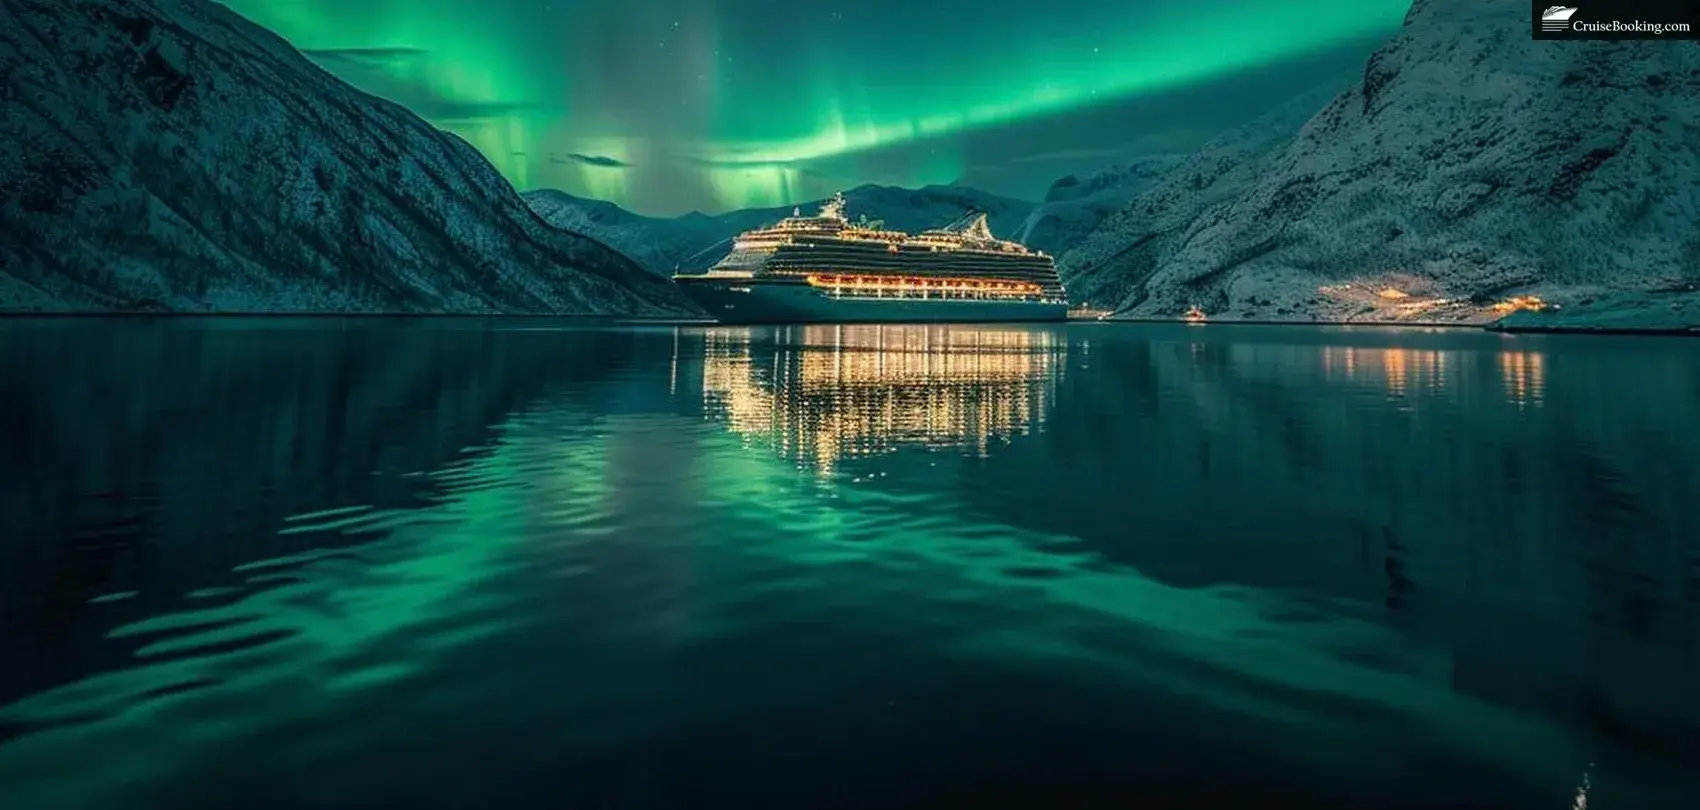 Cruise ship under aurora borealis at night